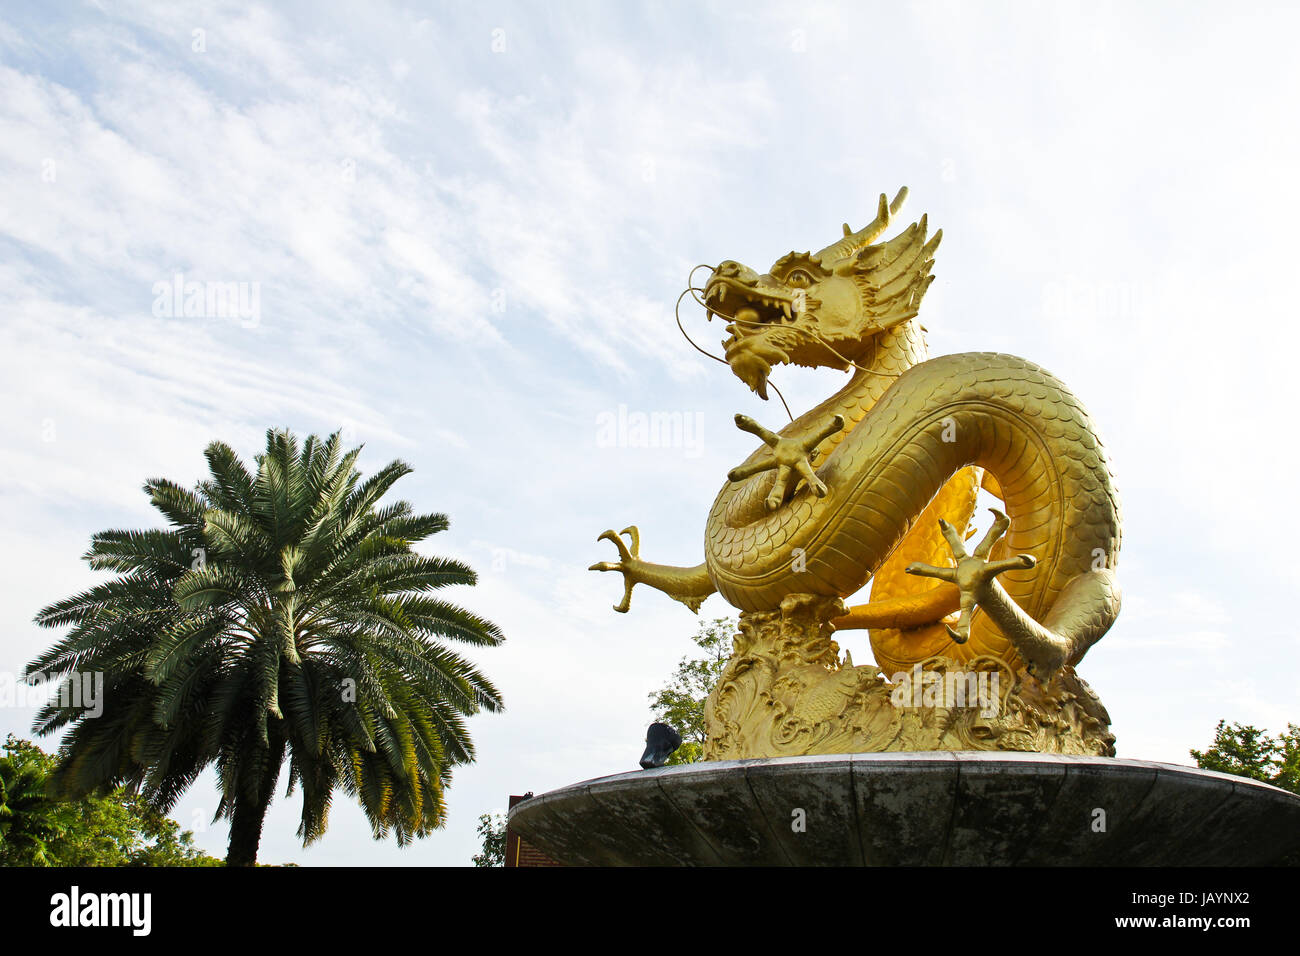 Chinese Golden Dragon Statue in Phuket, Thailand. Stock Photo